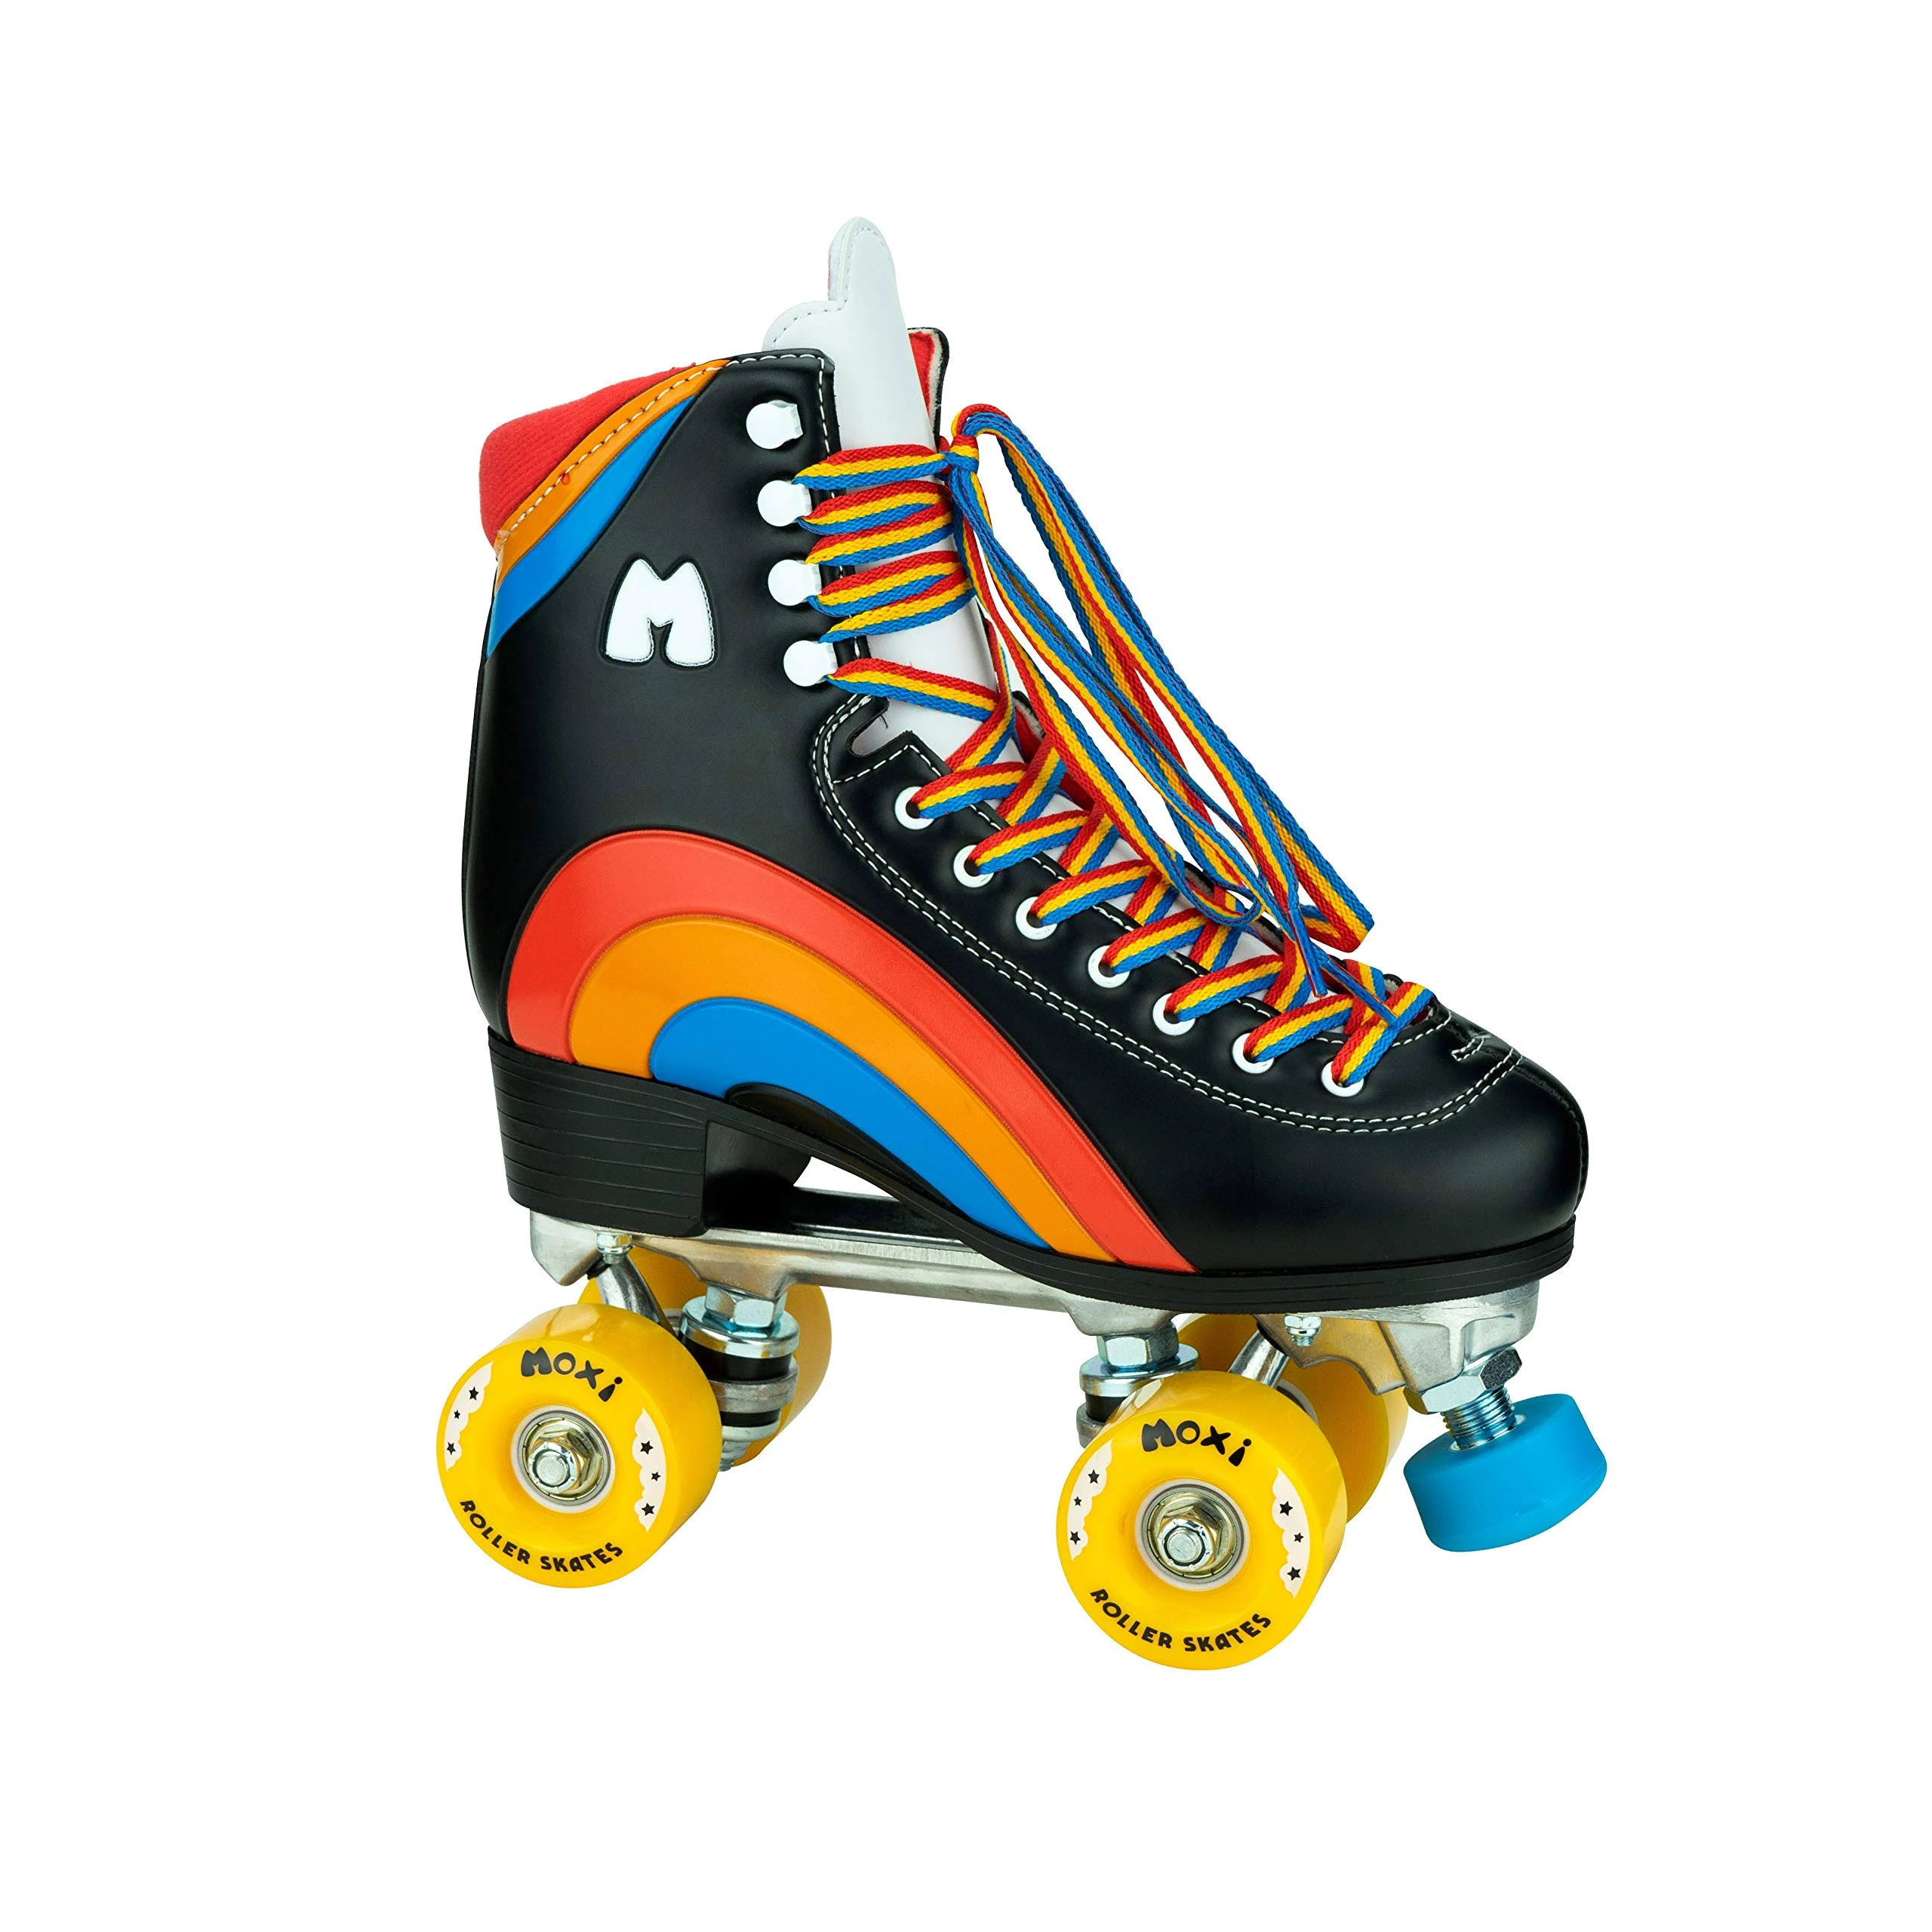 Moxi Skates  C Rainbow Rider  C Fun and Fashionable Womens Roller Skates